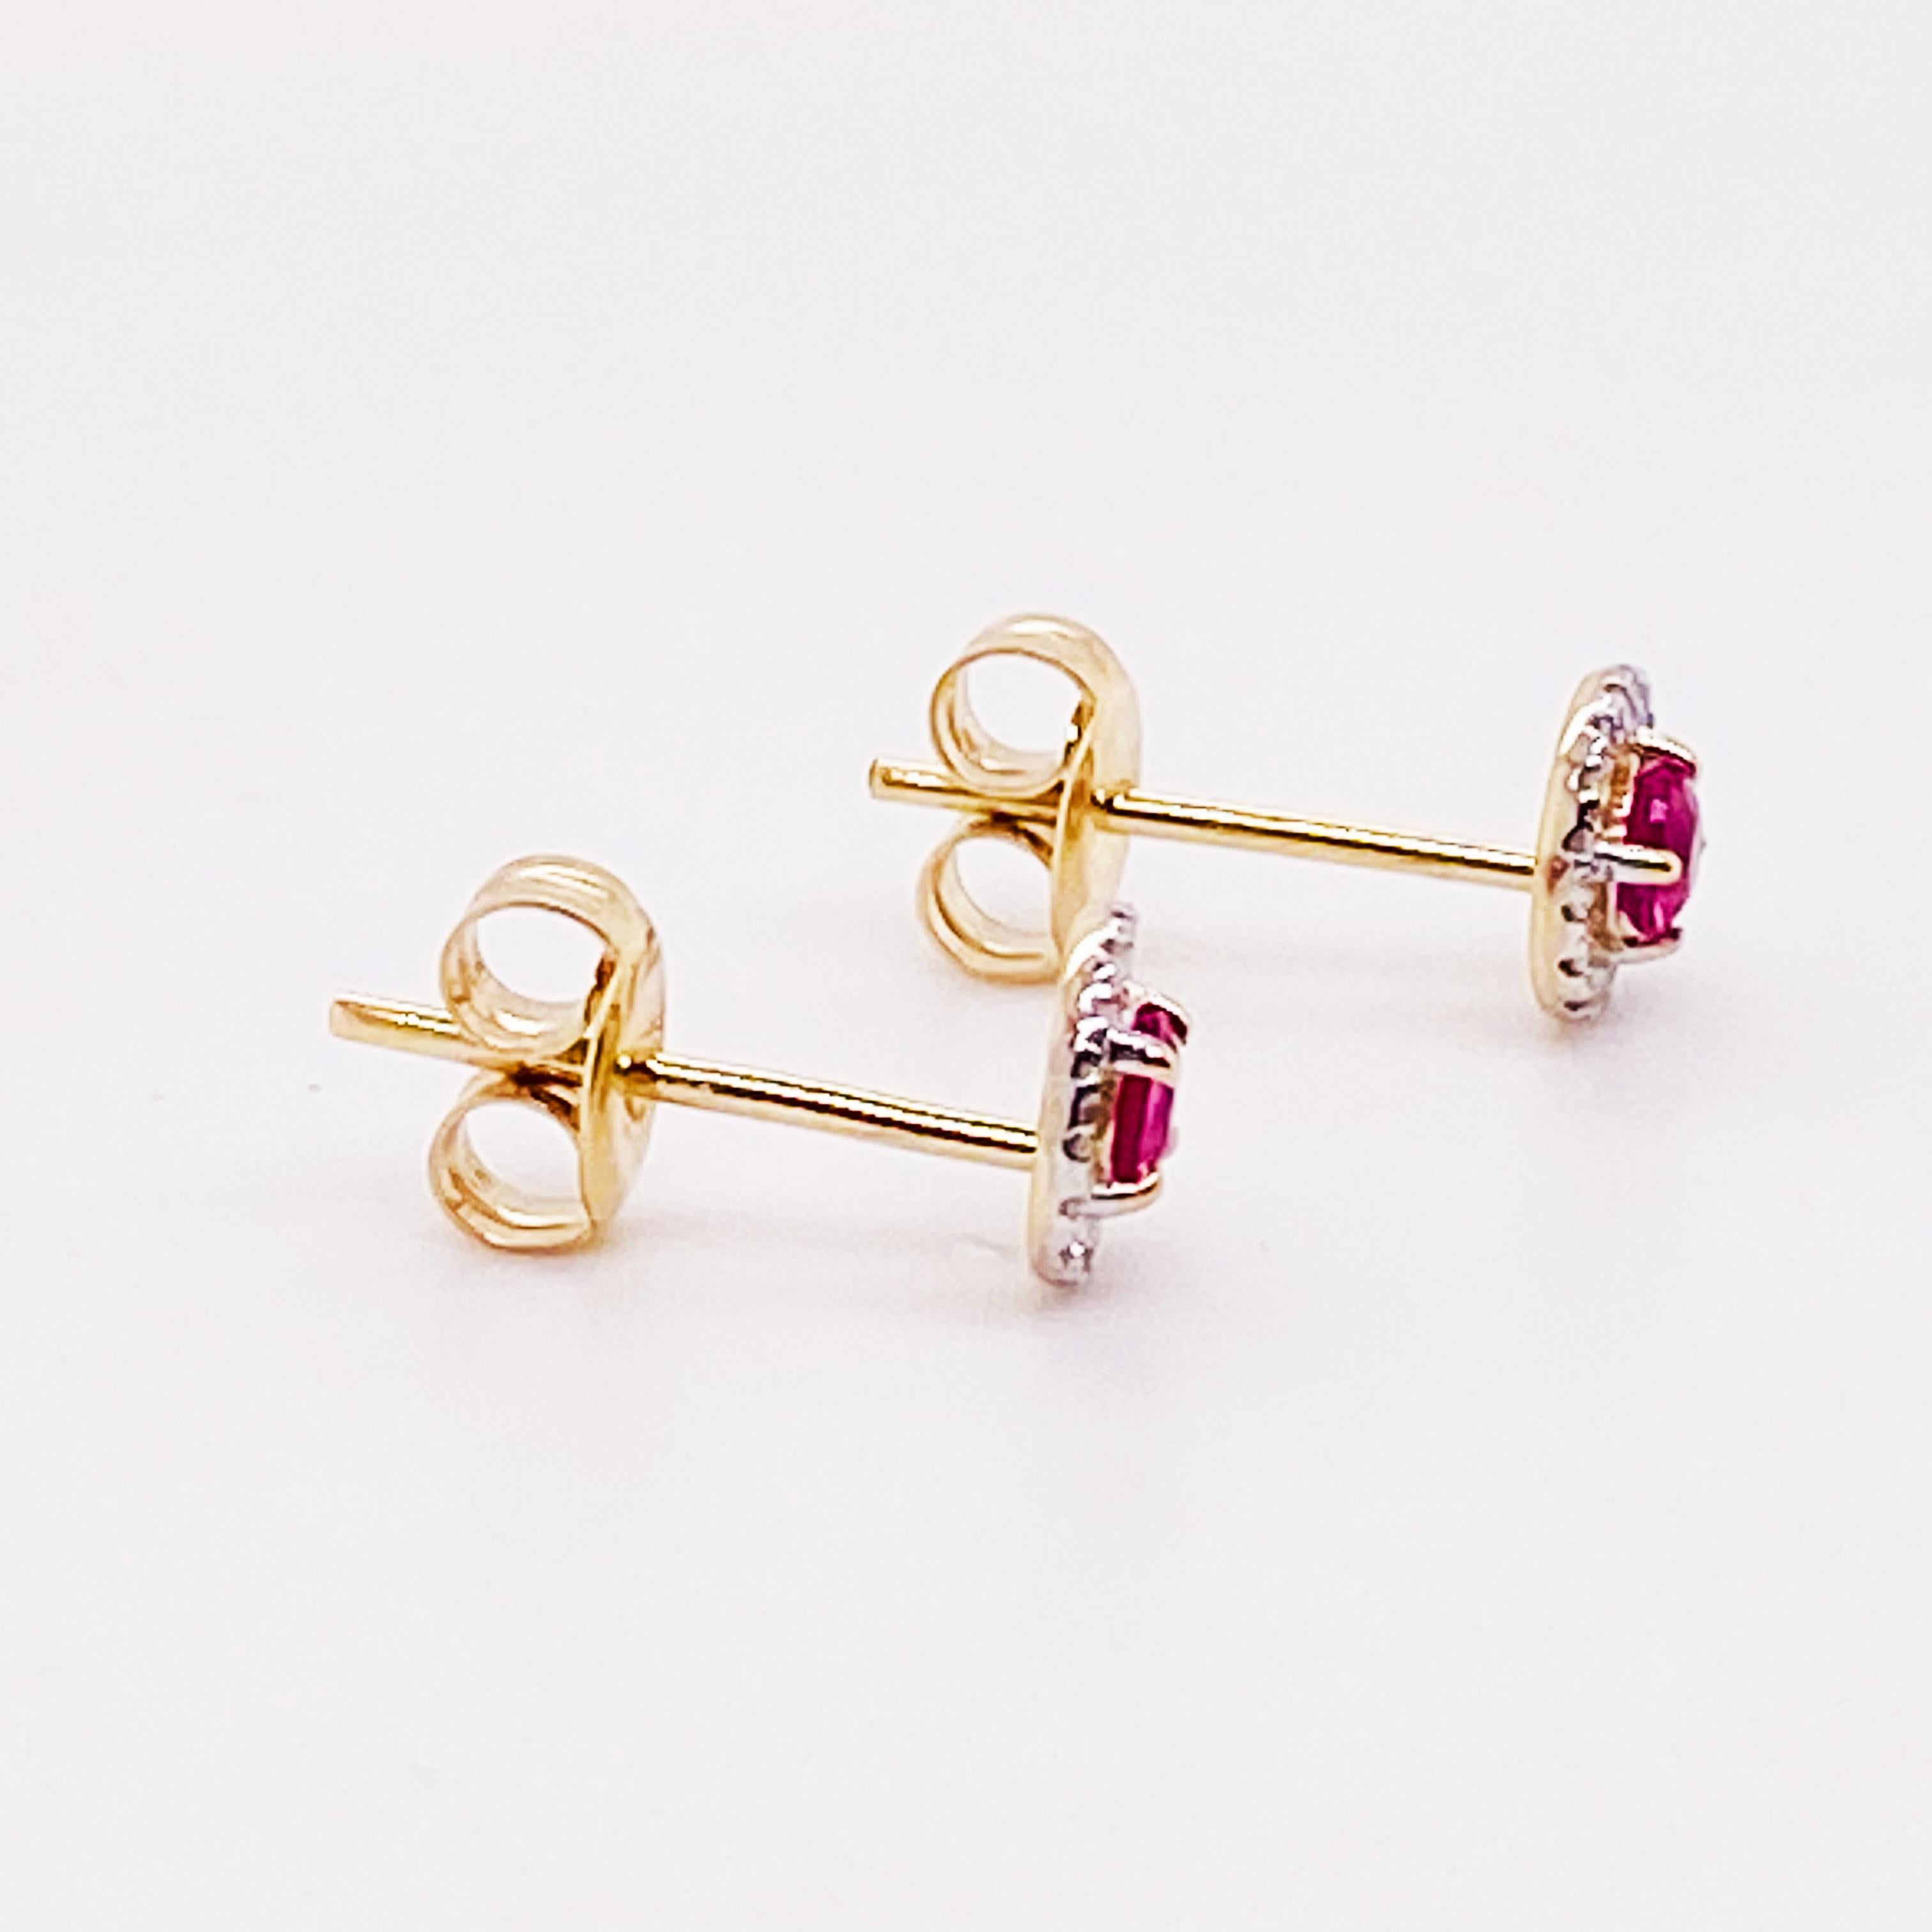 Contemporary Ruby & Diamond Halo Earrings 14K Gold July Ruby Earring Studs, Minimalist Post For Sale